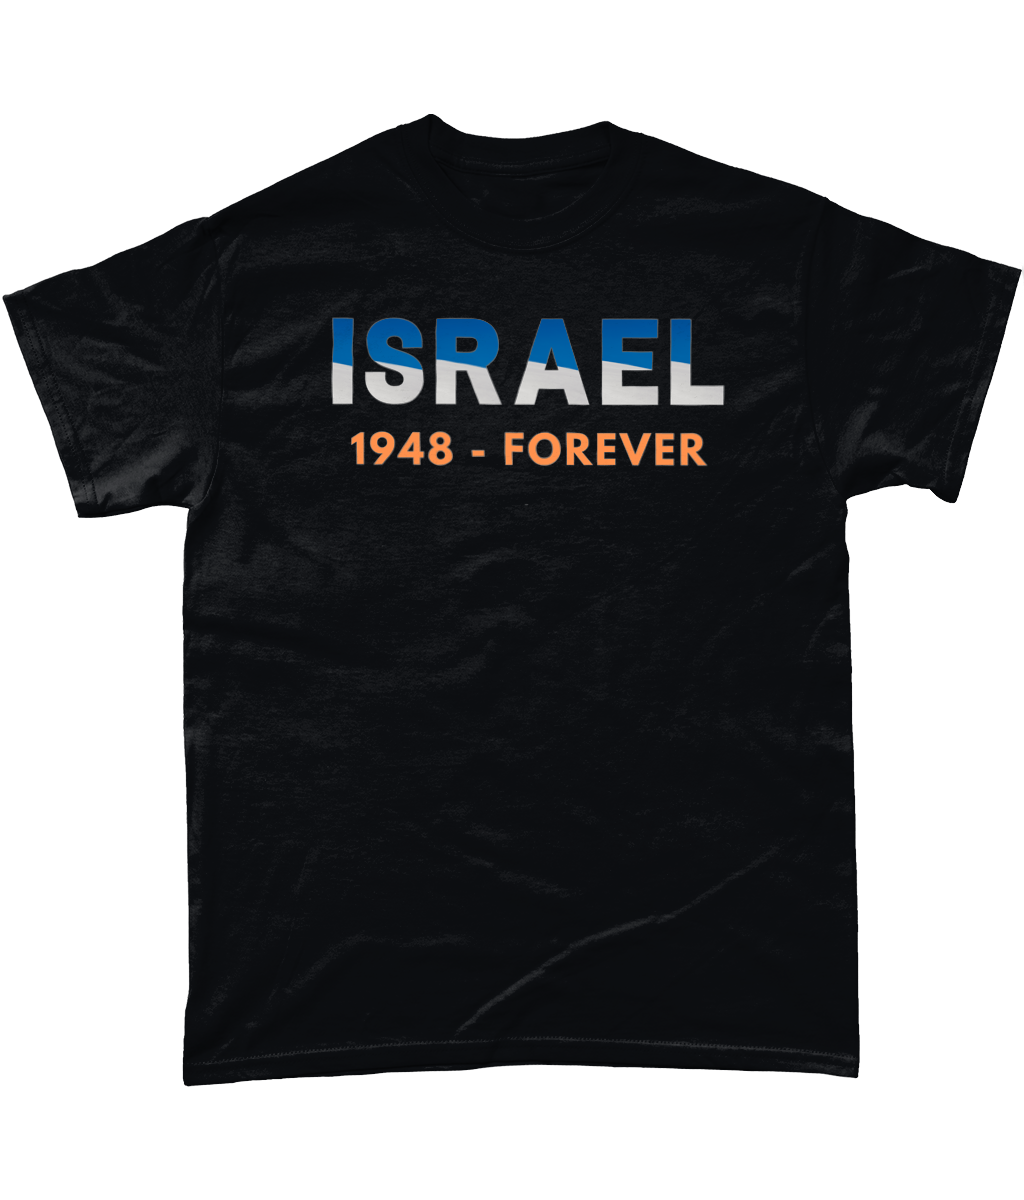 Israel 1948-Forever Shirt - EU